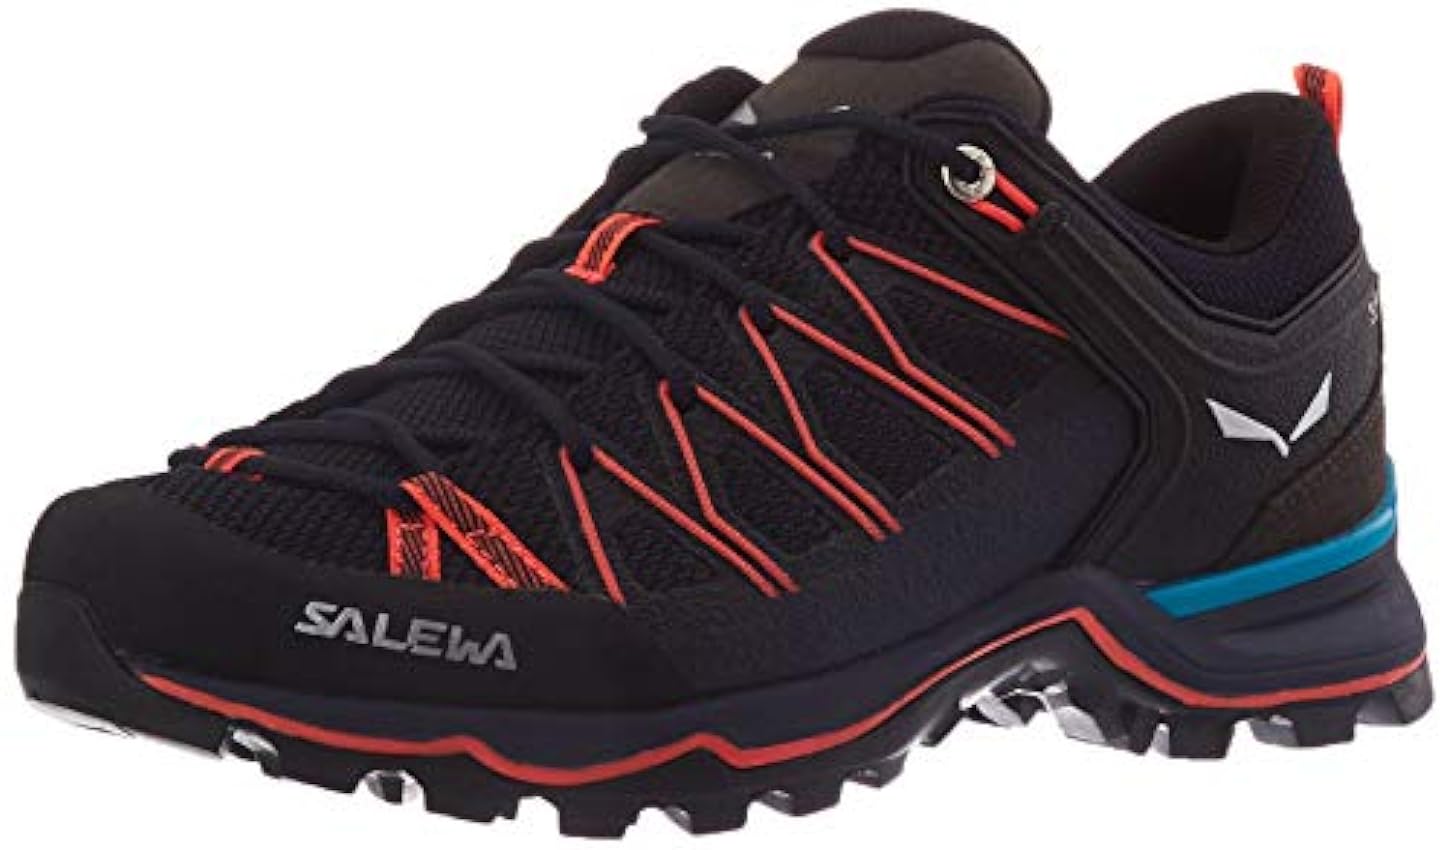 Salewa Femme WS Mountain Trainer Lite Chaussures de Randonnée Basses mx6Ii6pq